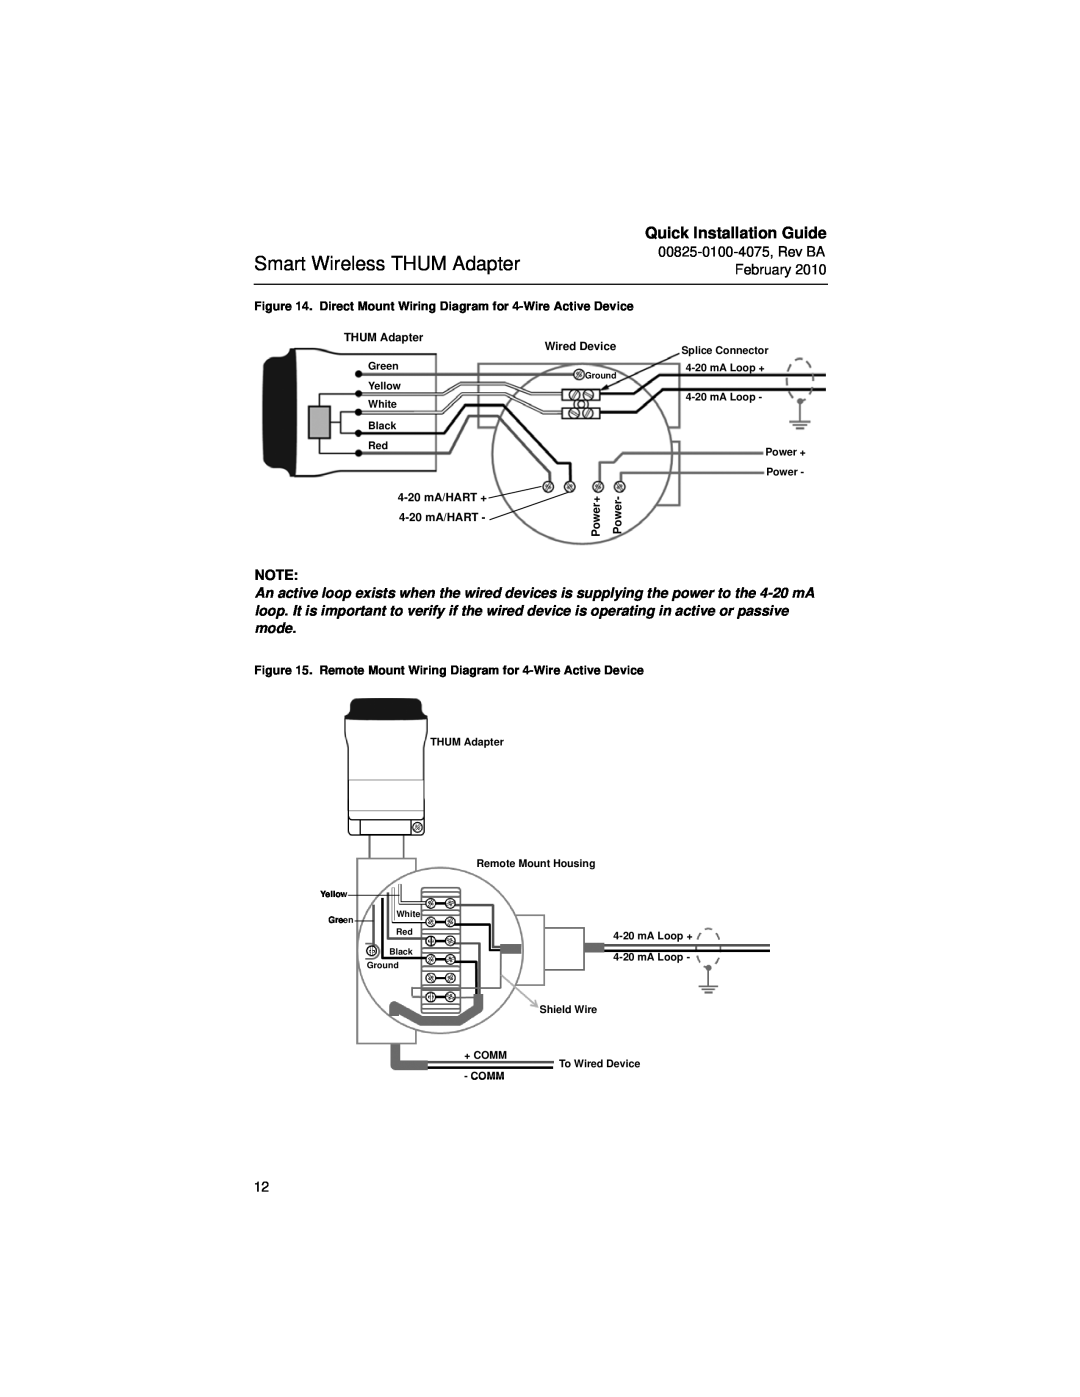 Emerson 00825-0100-4075 manual Smart Wireless THUM Adapter, Quick Installation Guide, 4-20 mA/HART + 4-20 mA/HART 